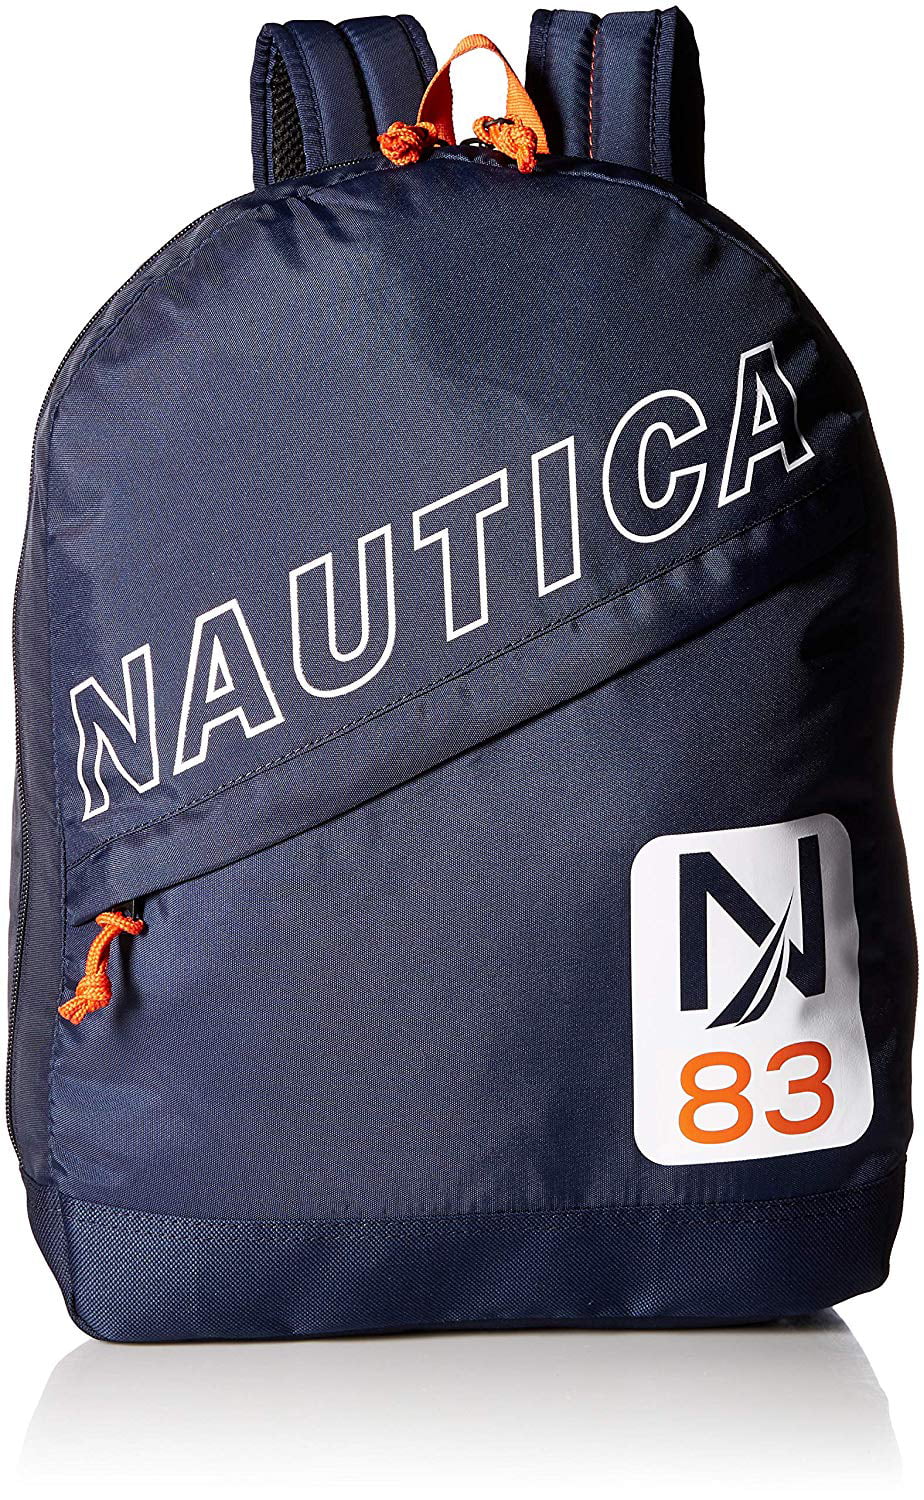 Nautica Polyester N83 Lightweight Diagonal Zip Backpack Navy